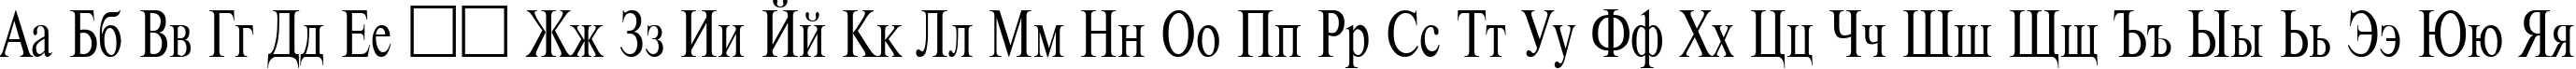 Пример написания русского алфавита шрифтом TimesET70n